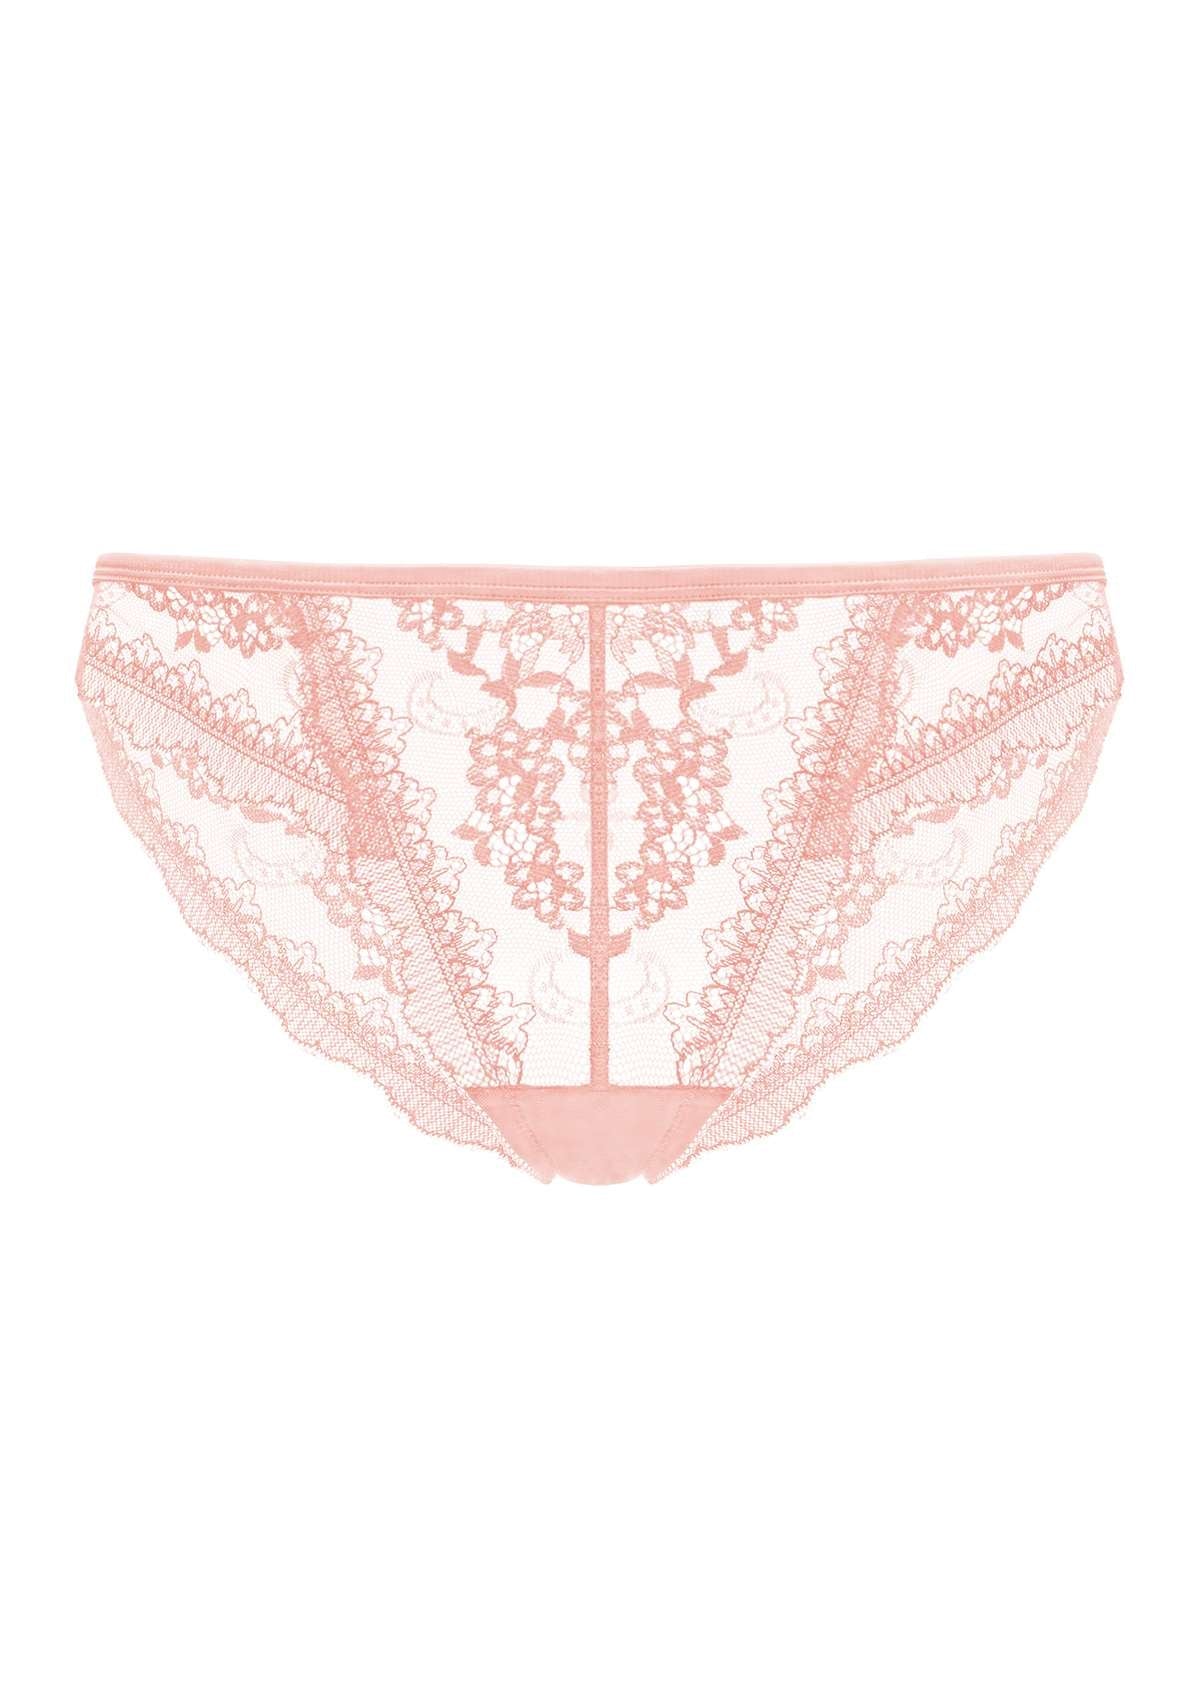 HSIA Floral Bridal Intricate All-Over Lace Romantic Bikini Underwear - Pink / M